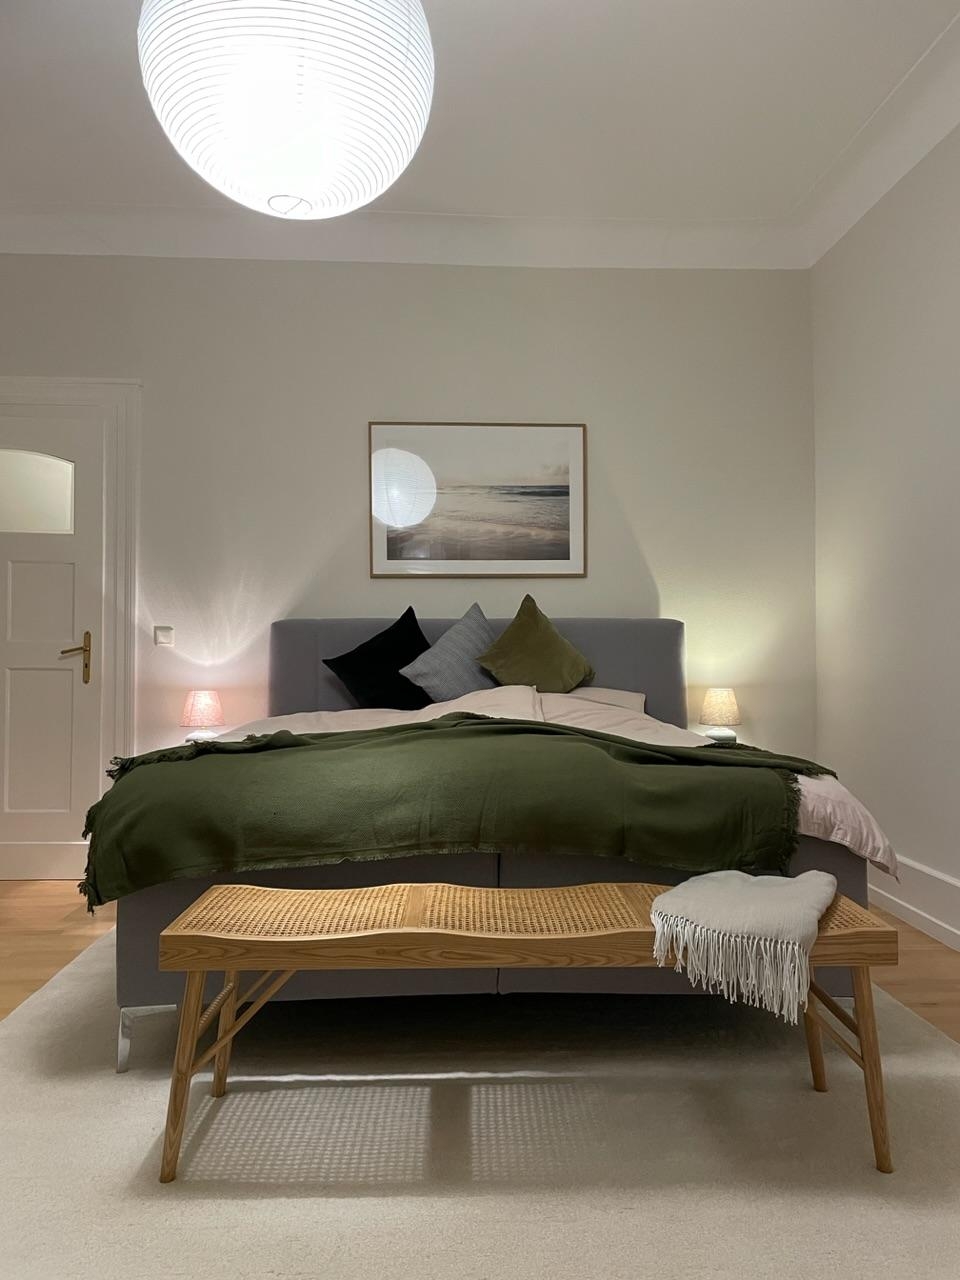 #schlafzimmer #bedroom #cozy #altbau #altbauliebe